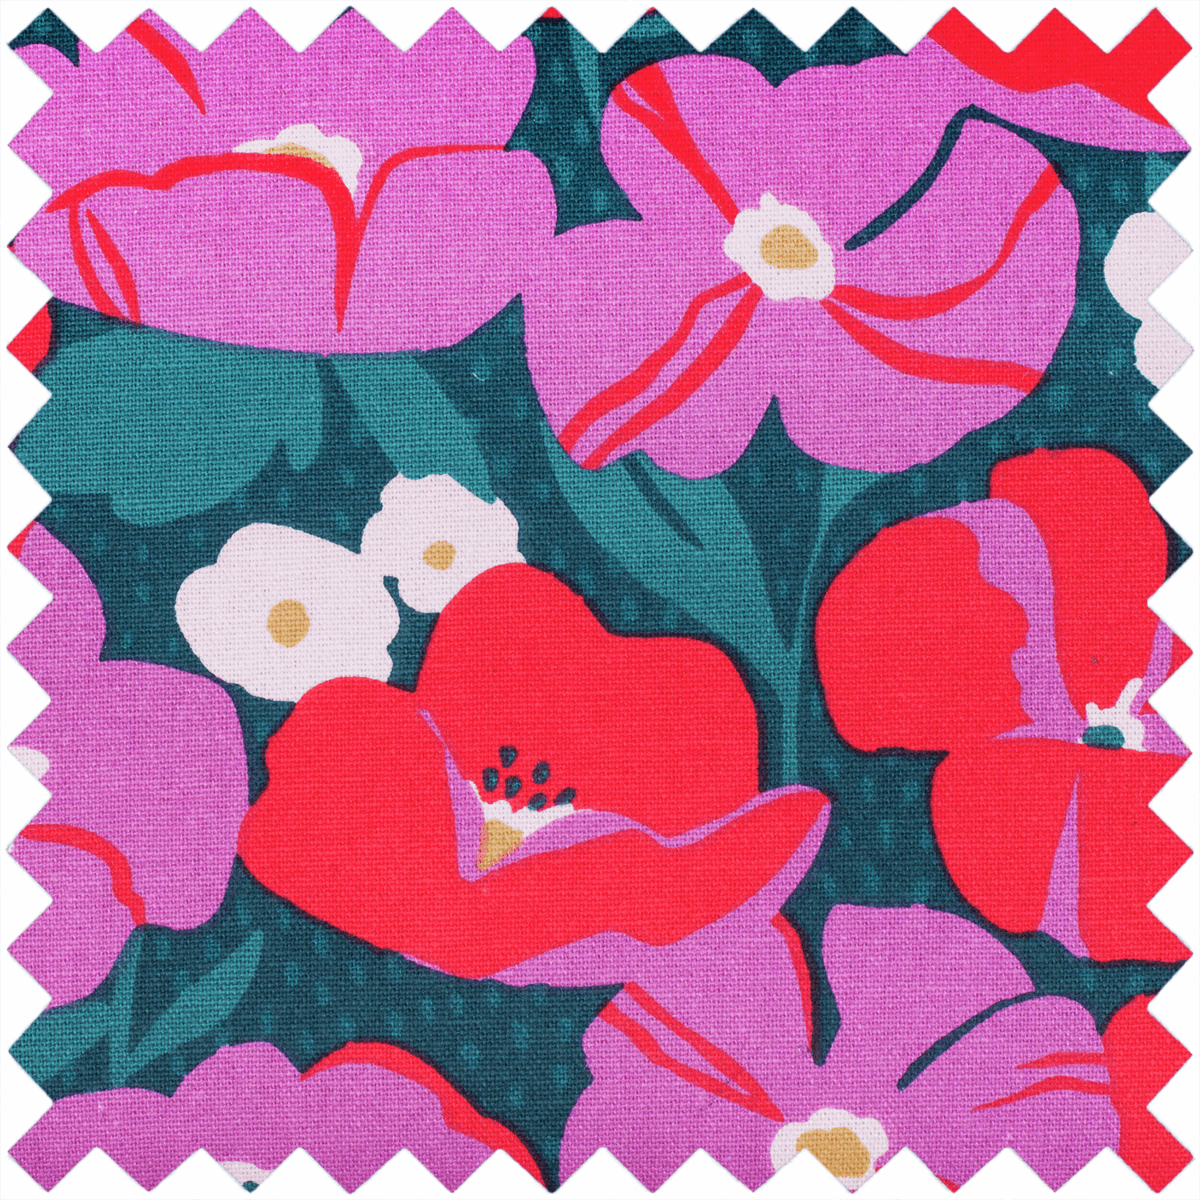 Modern Floral Sewing Machine Bag (Matt PVC)